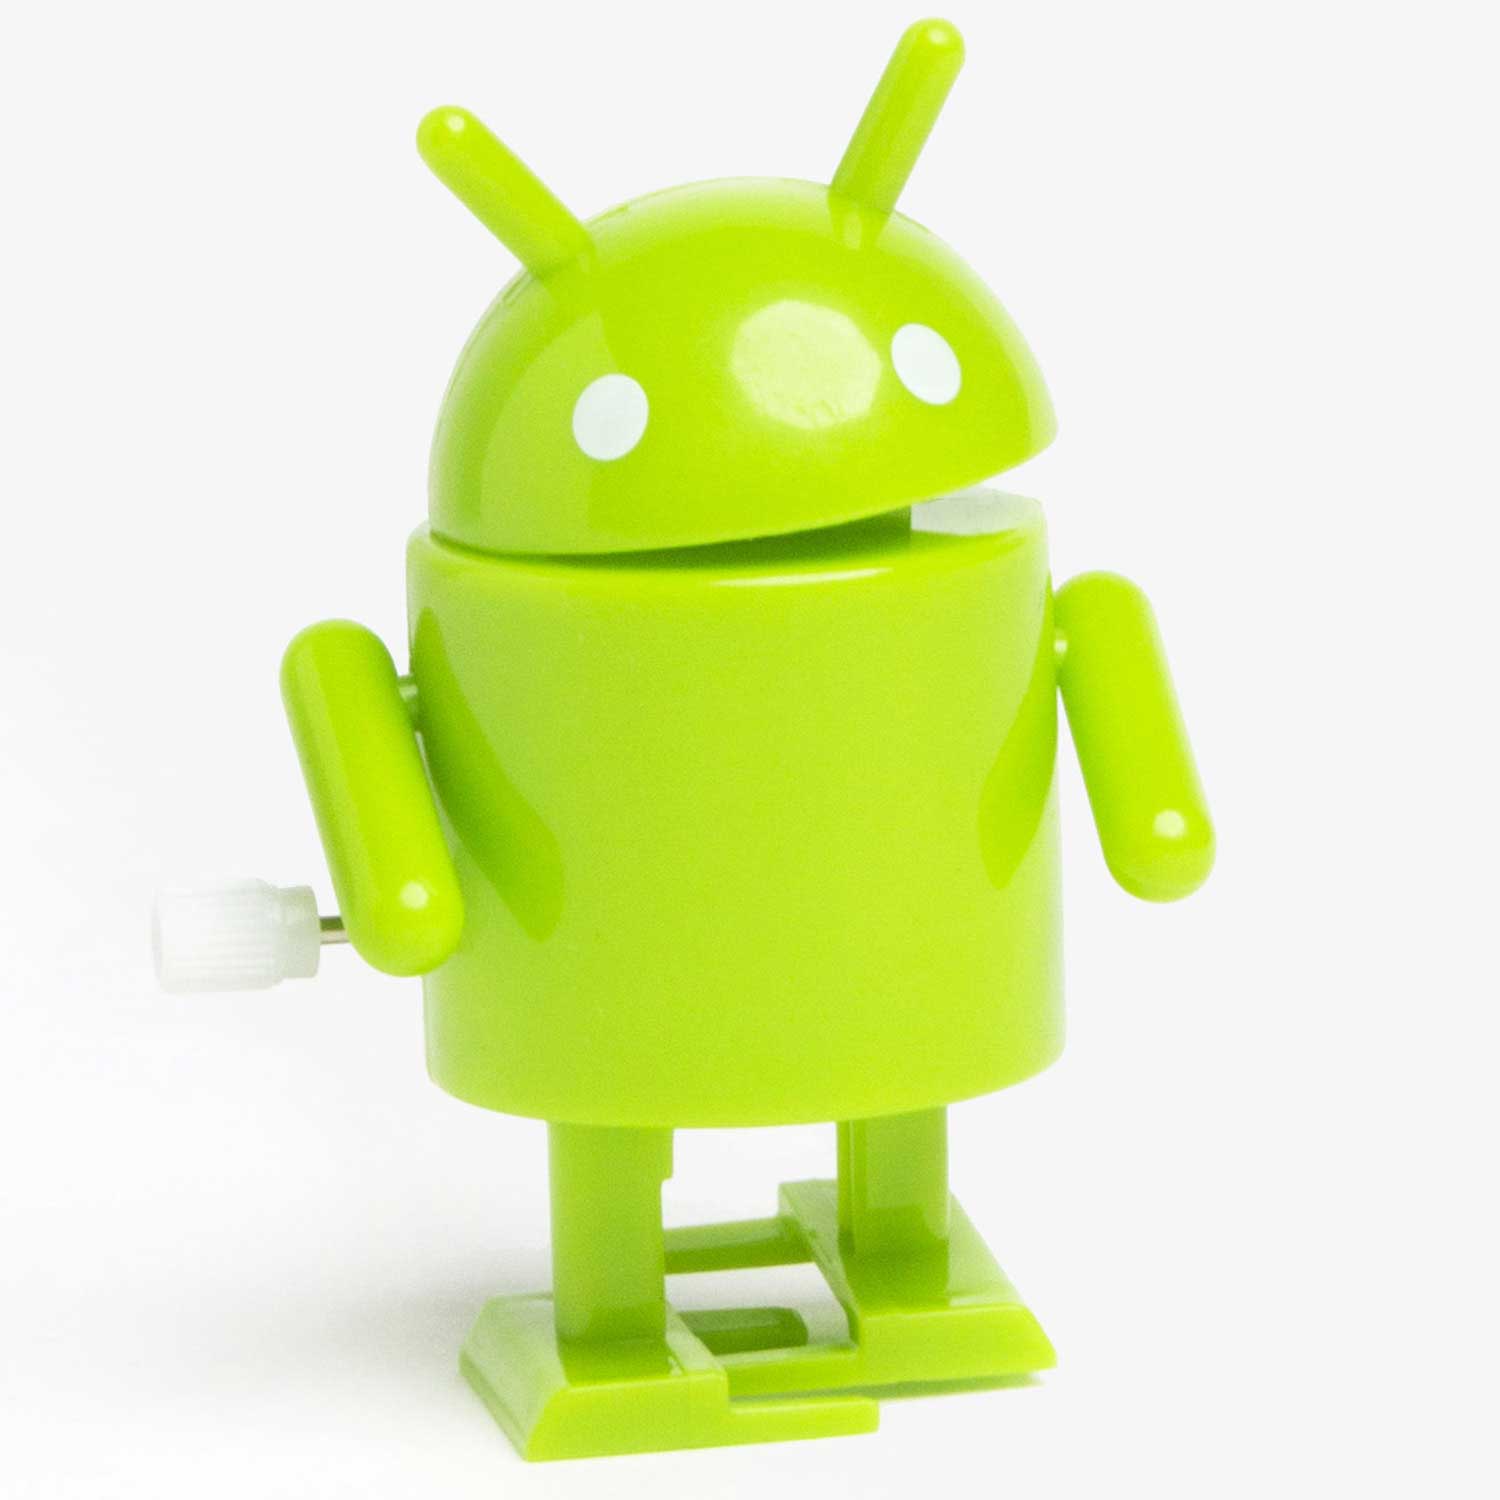 Toy android. Андроид игрушка. Робот Android игрушка. Игрушка андроид зеленый робот. Пластиковые игрушки андроид.